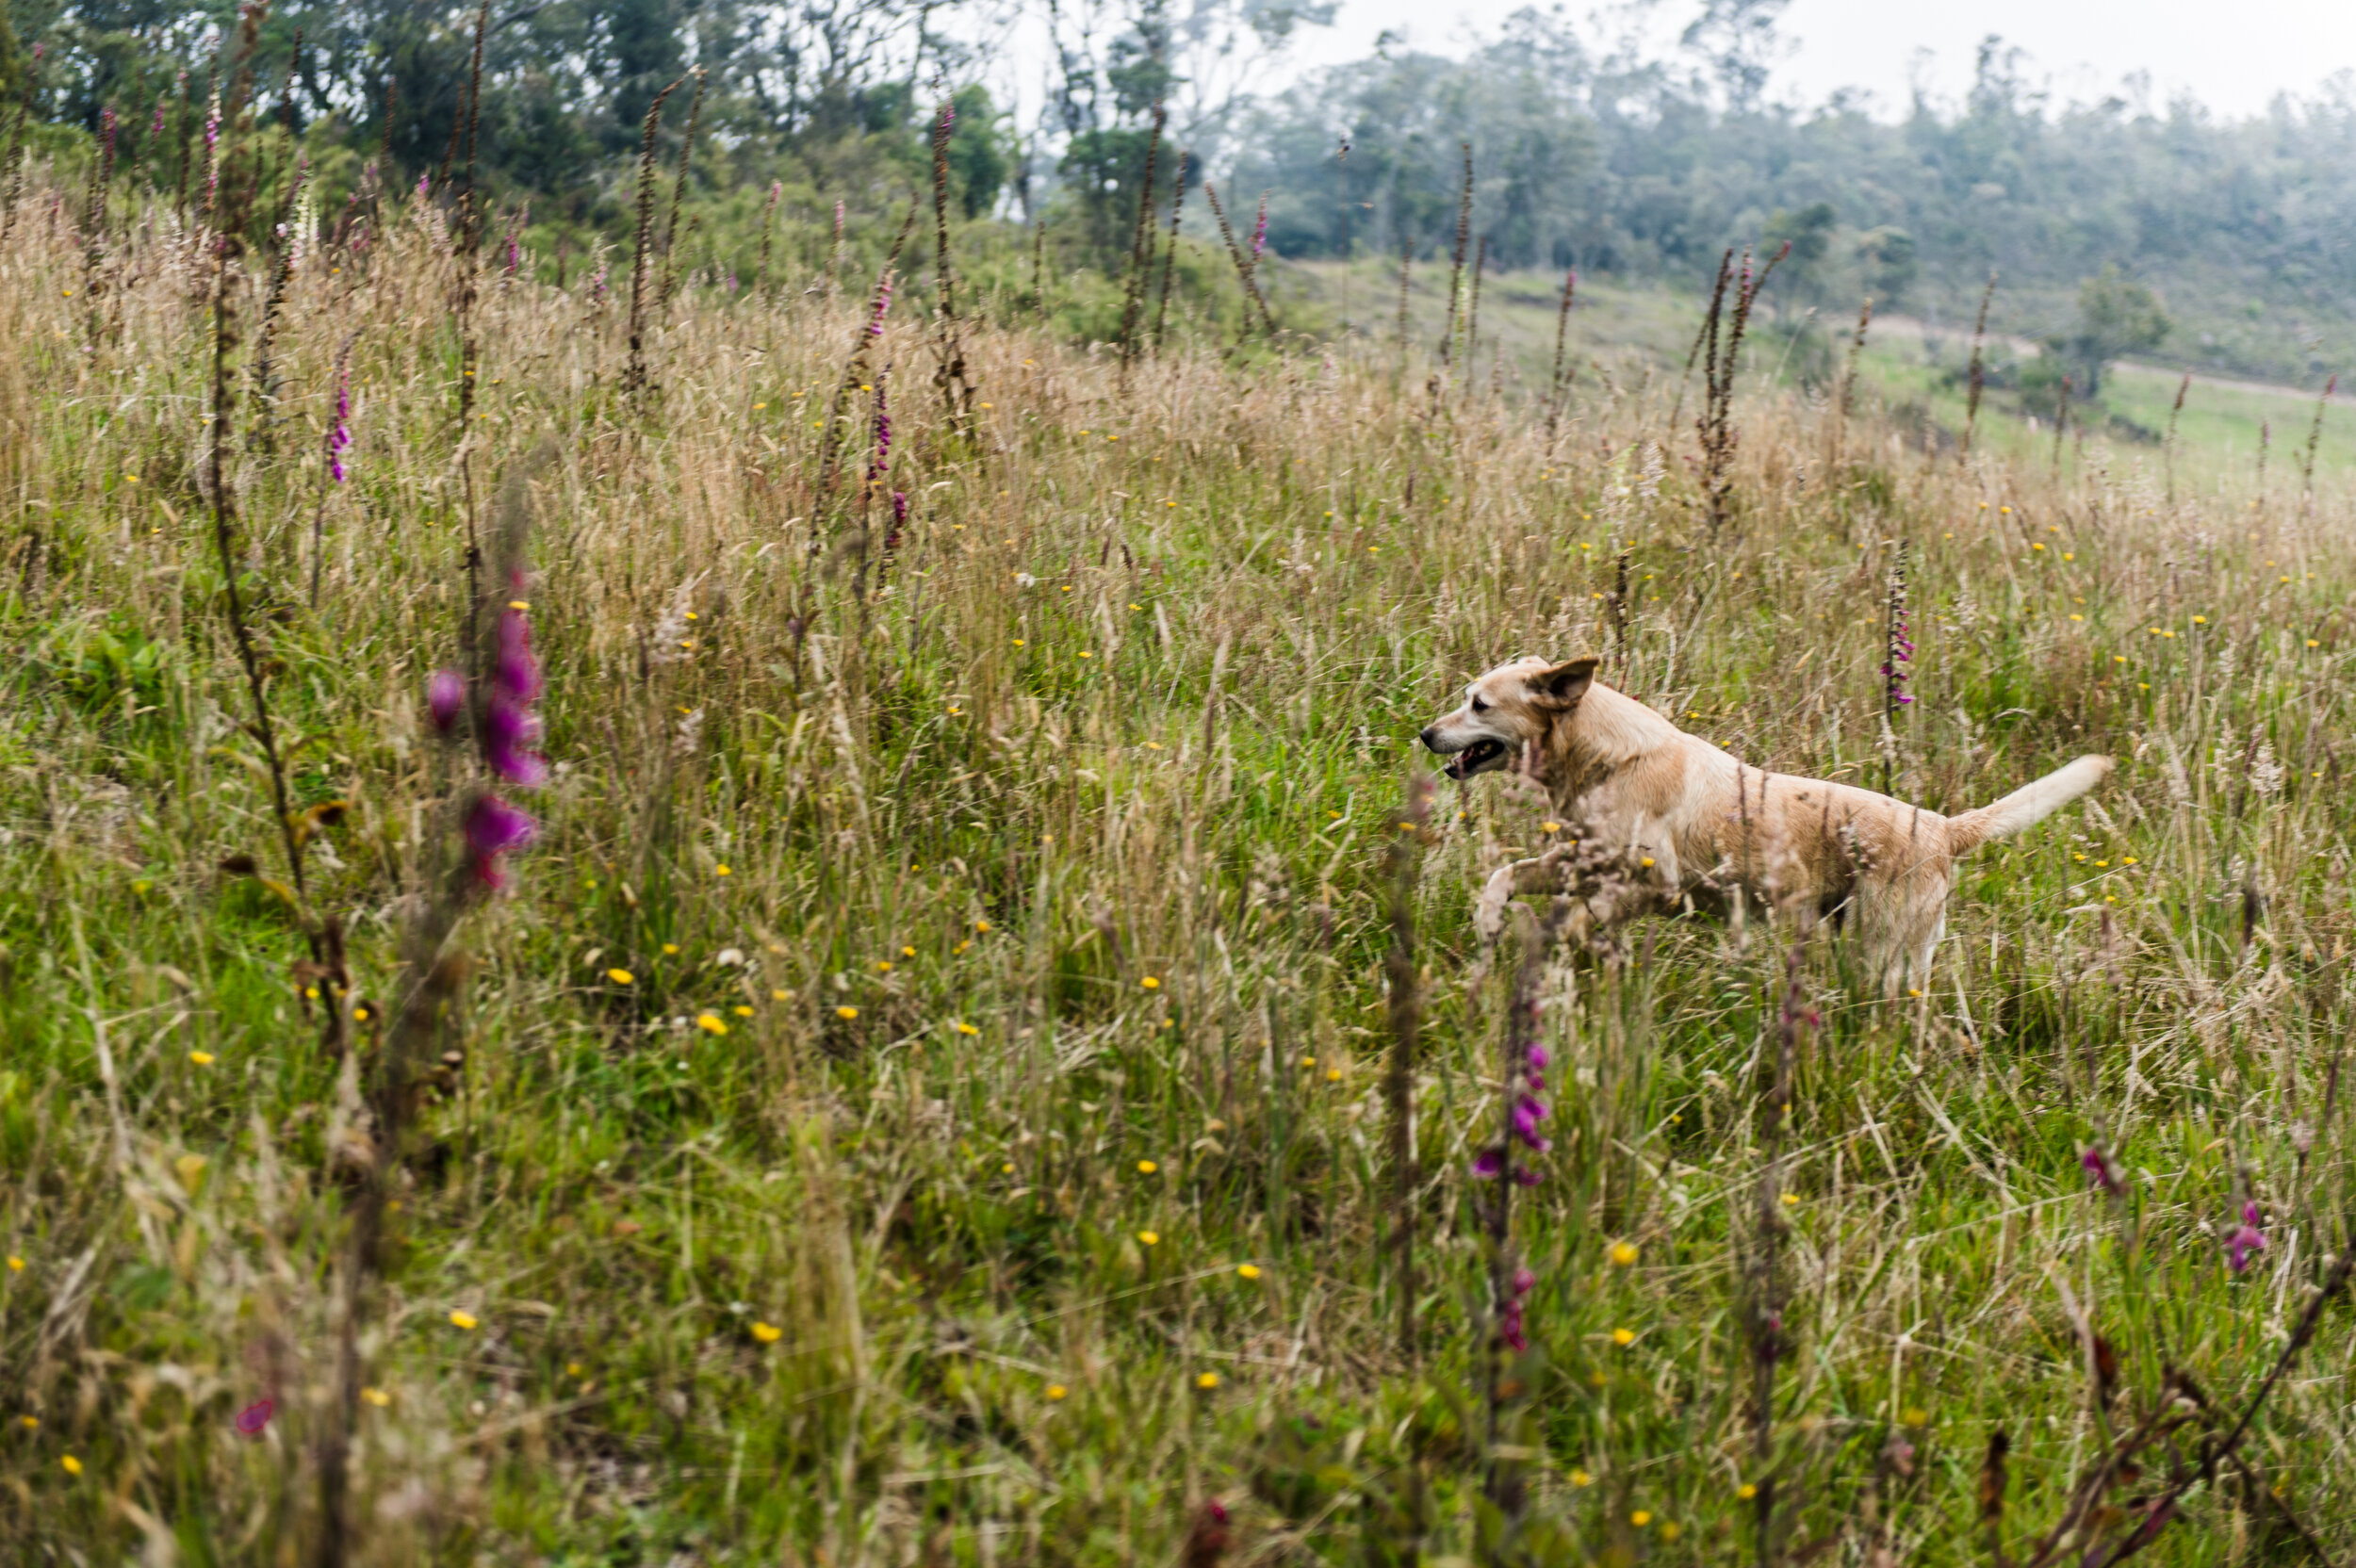  Kita runs free in the grasslands. 